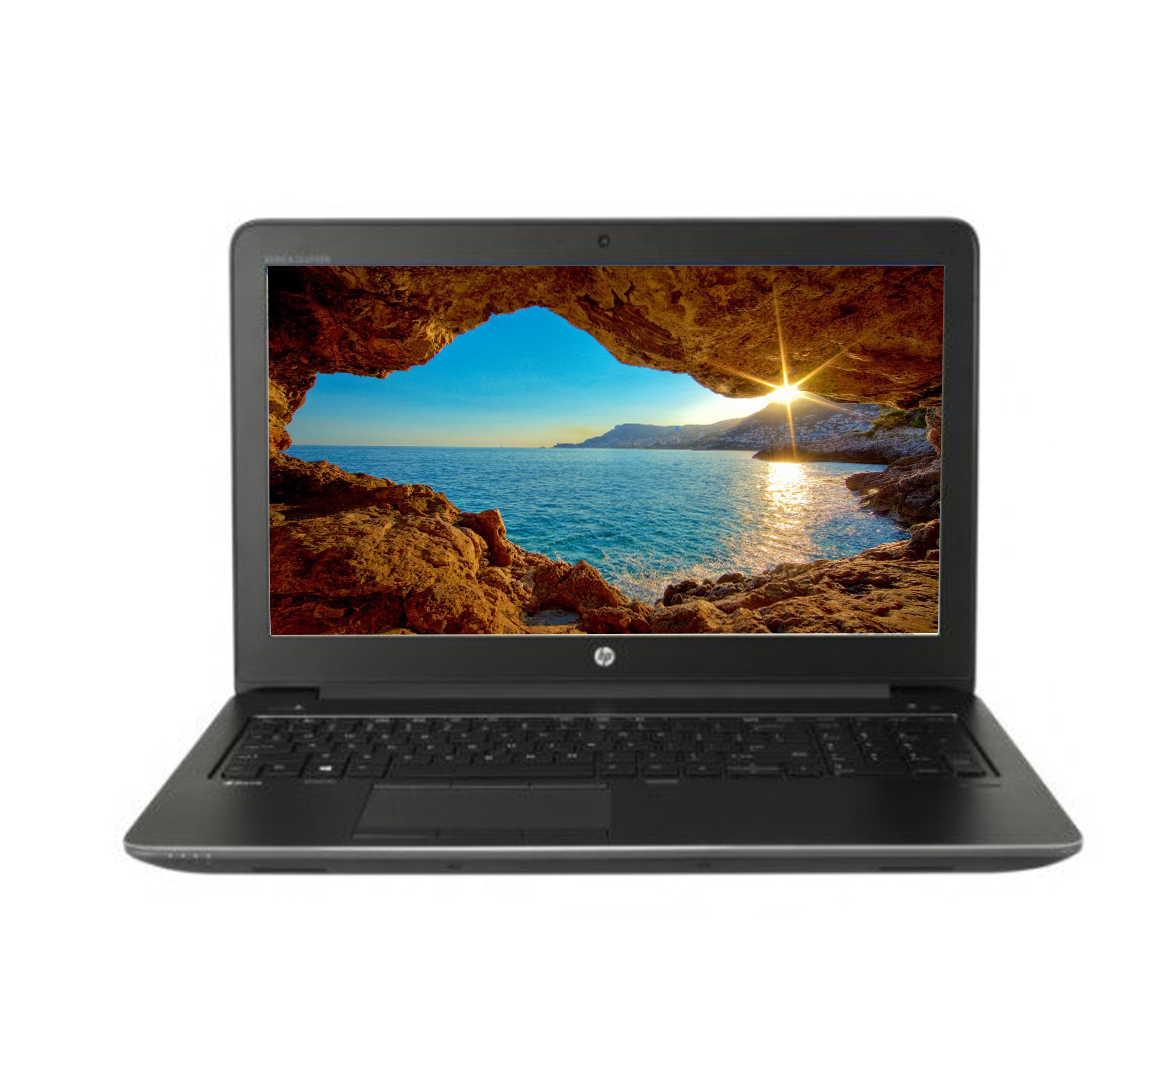 HP Zbook Studio G3, Intel Core i7-6th Gen CPU, 16GB , 512GB SSD, 15.6 inch Display, NVIDIA QUADRO M1000M 2GB GDDR5 Graphics, Refurbished Laptop